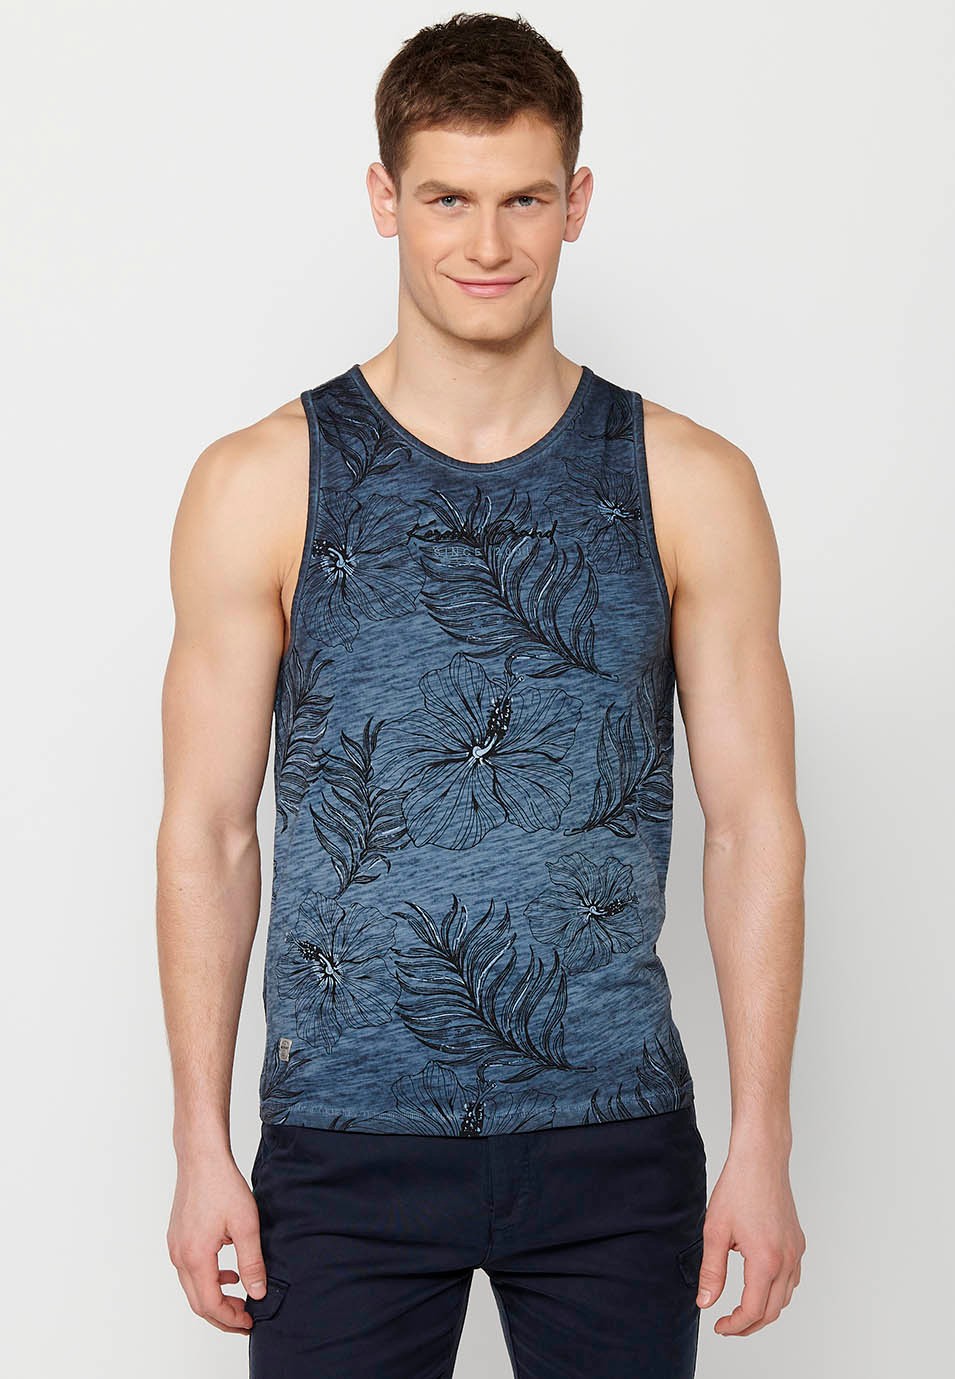 Tank top, floral print, blue color for men